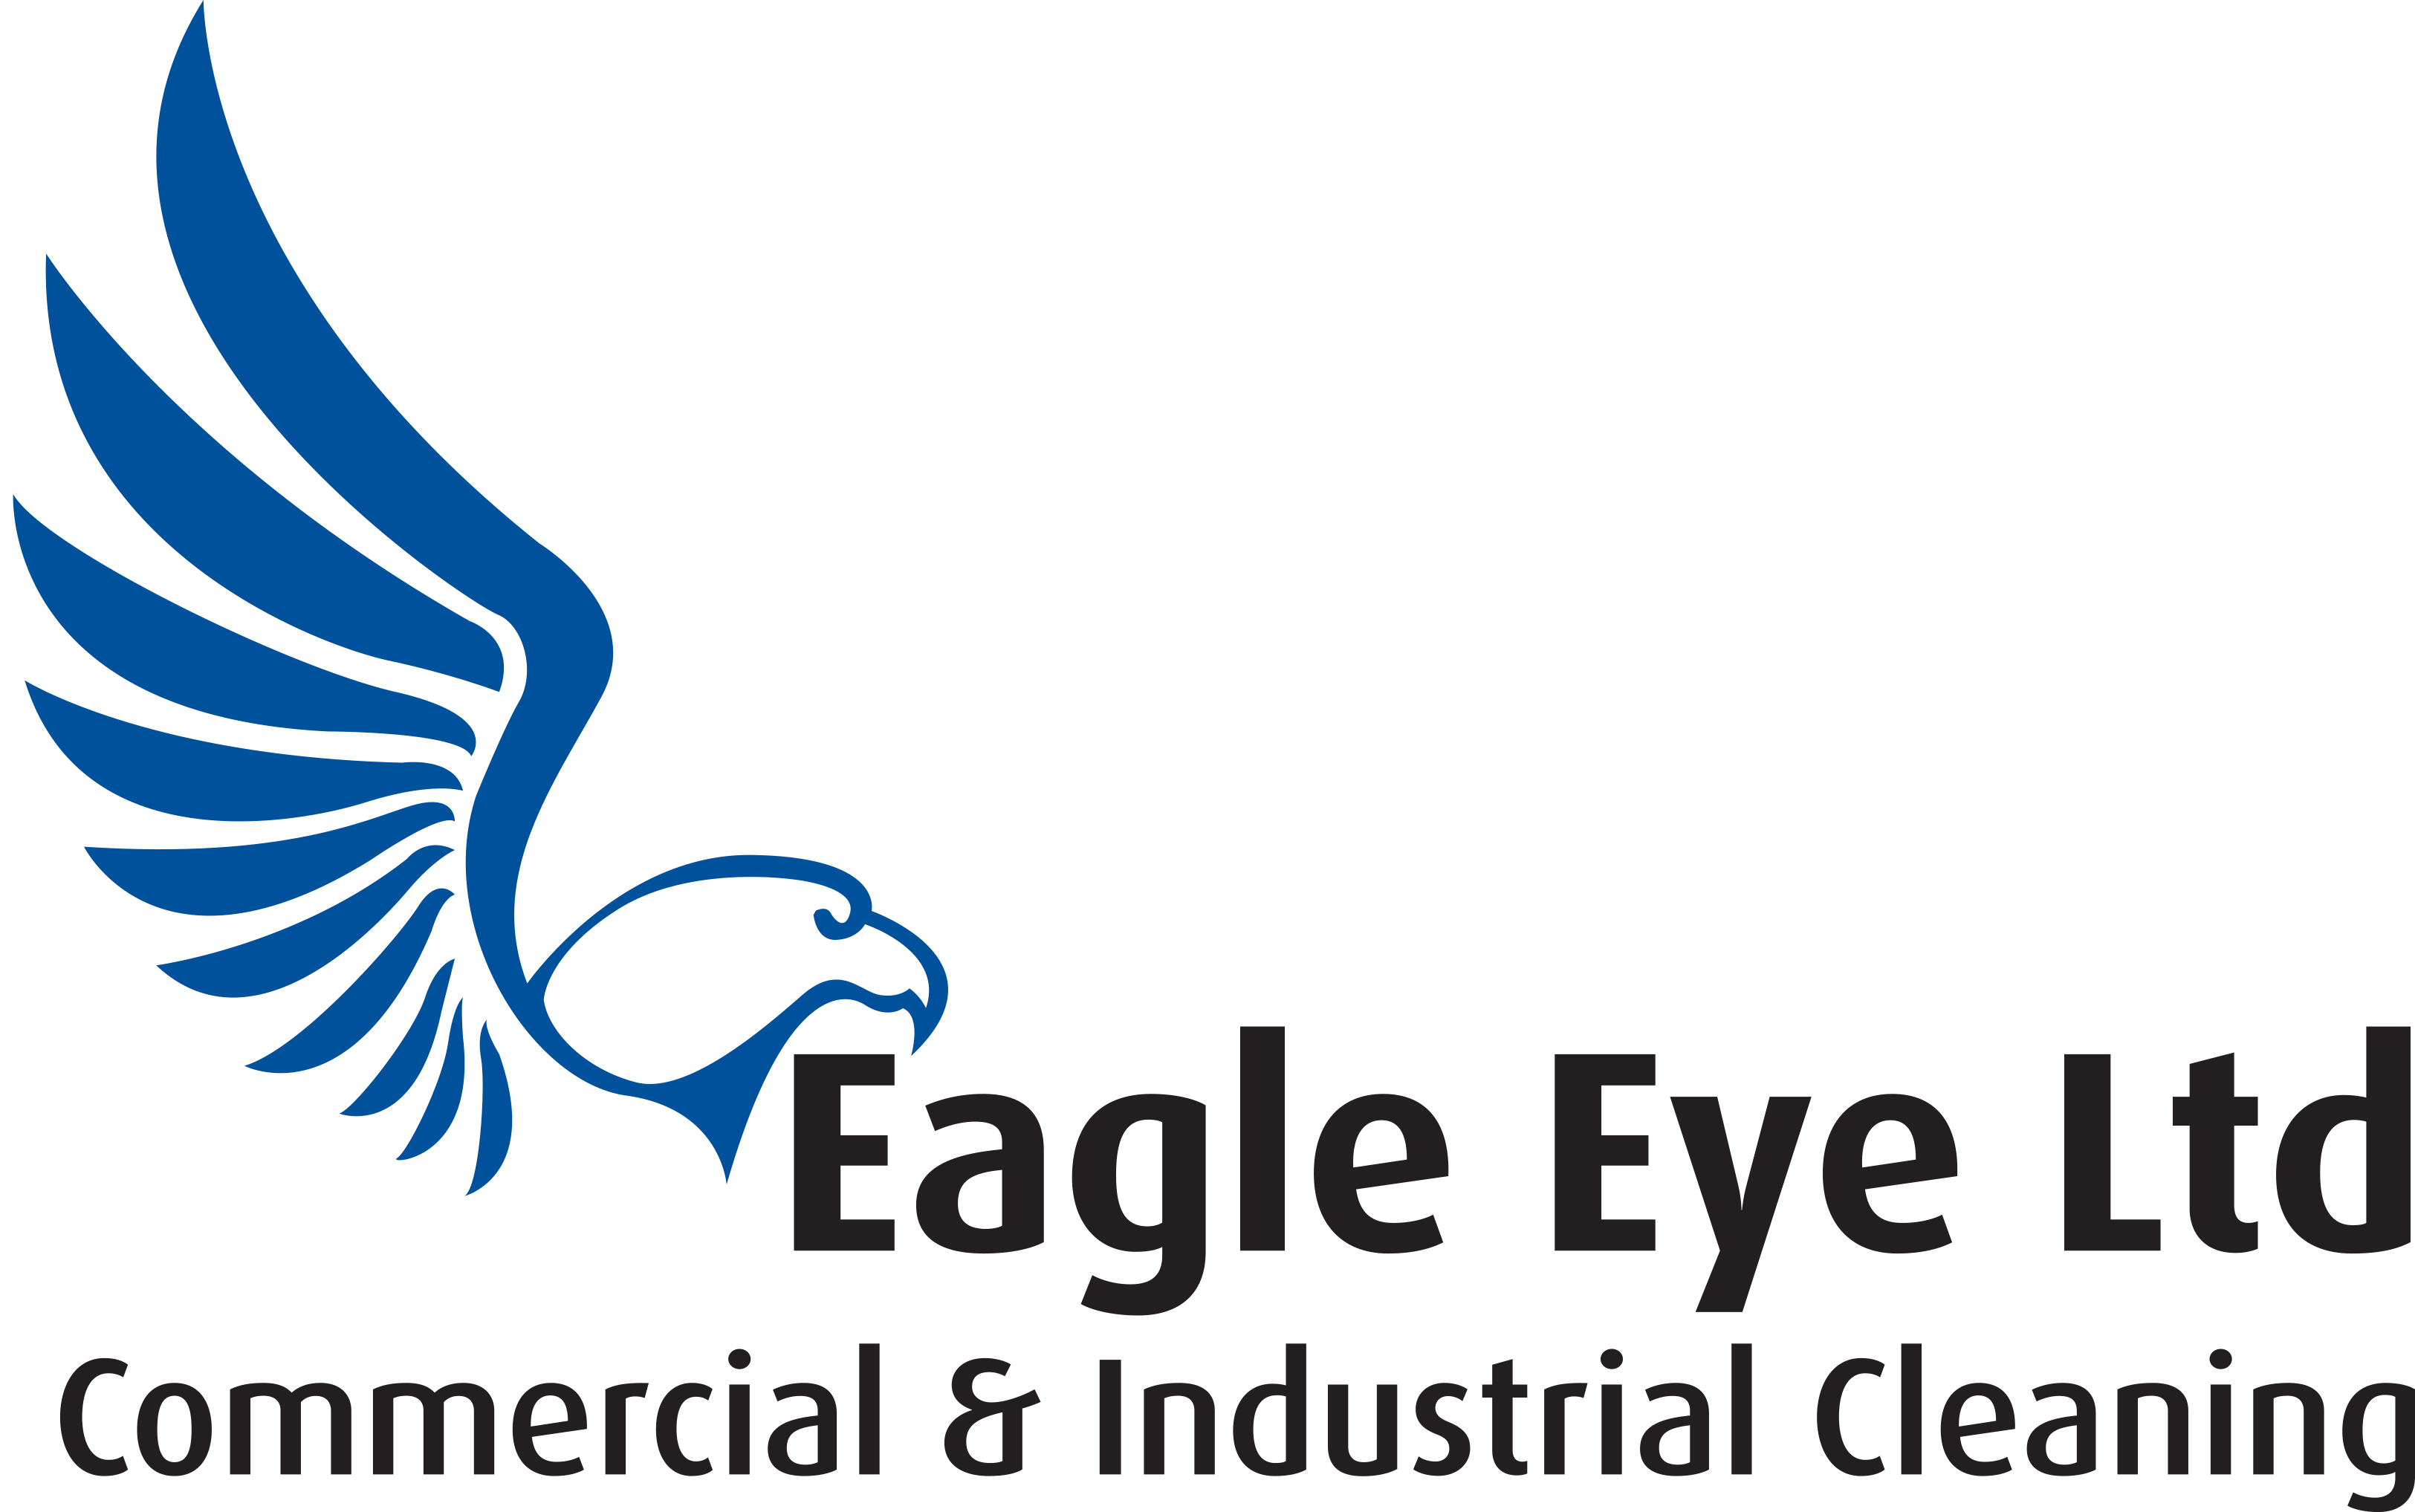 Eagle Eye Ltd.